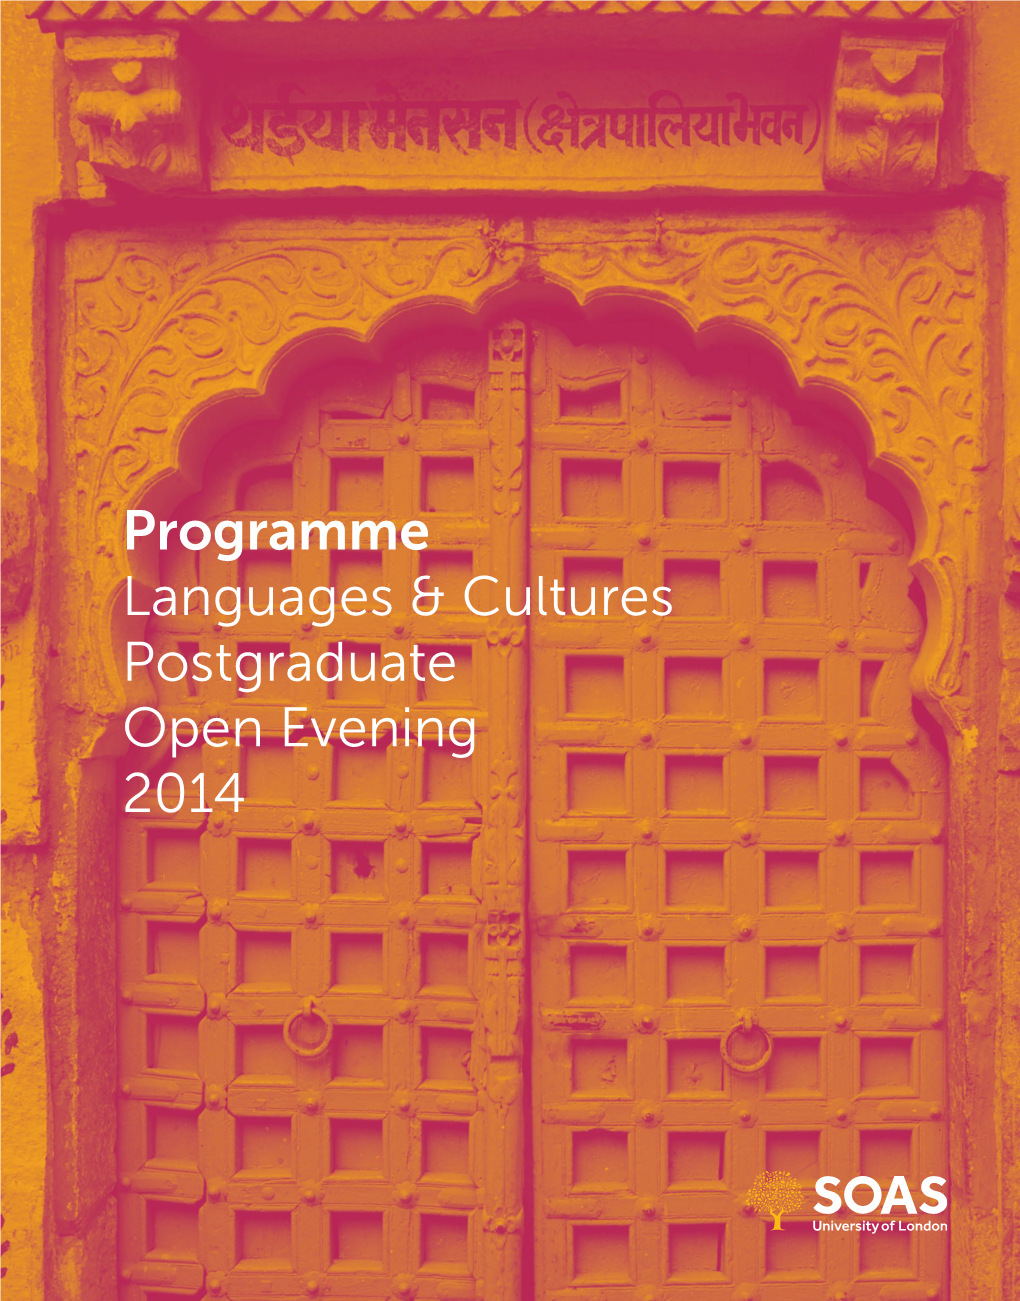 Programme Languages & Cultures Postgraduate Open Evening 2014